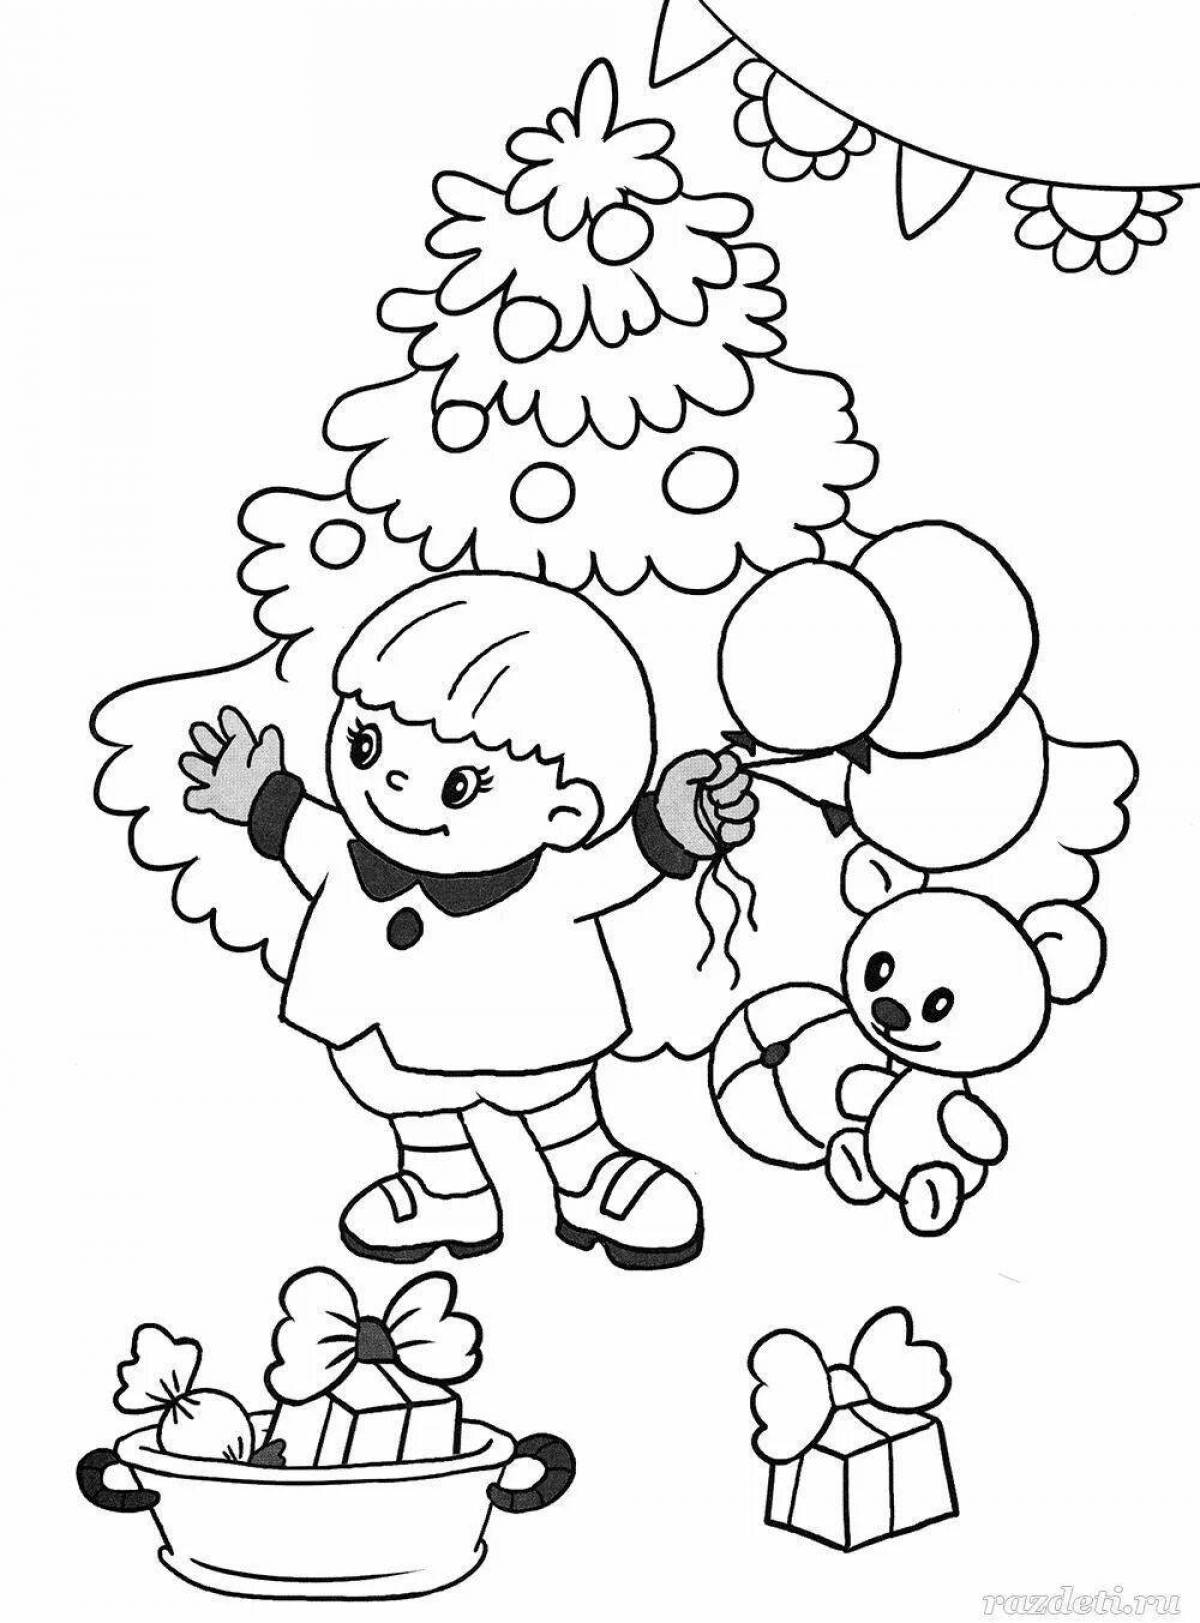 Joyful winter coloring for kids